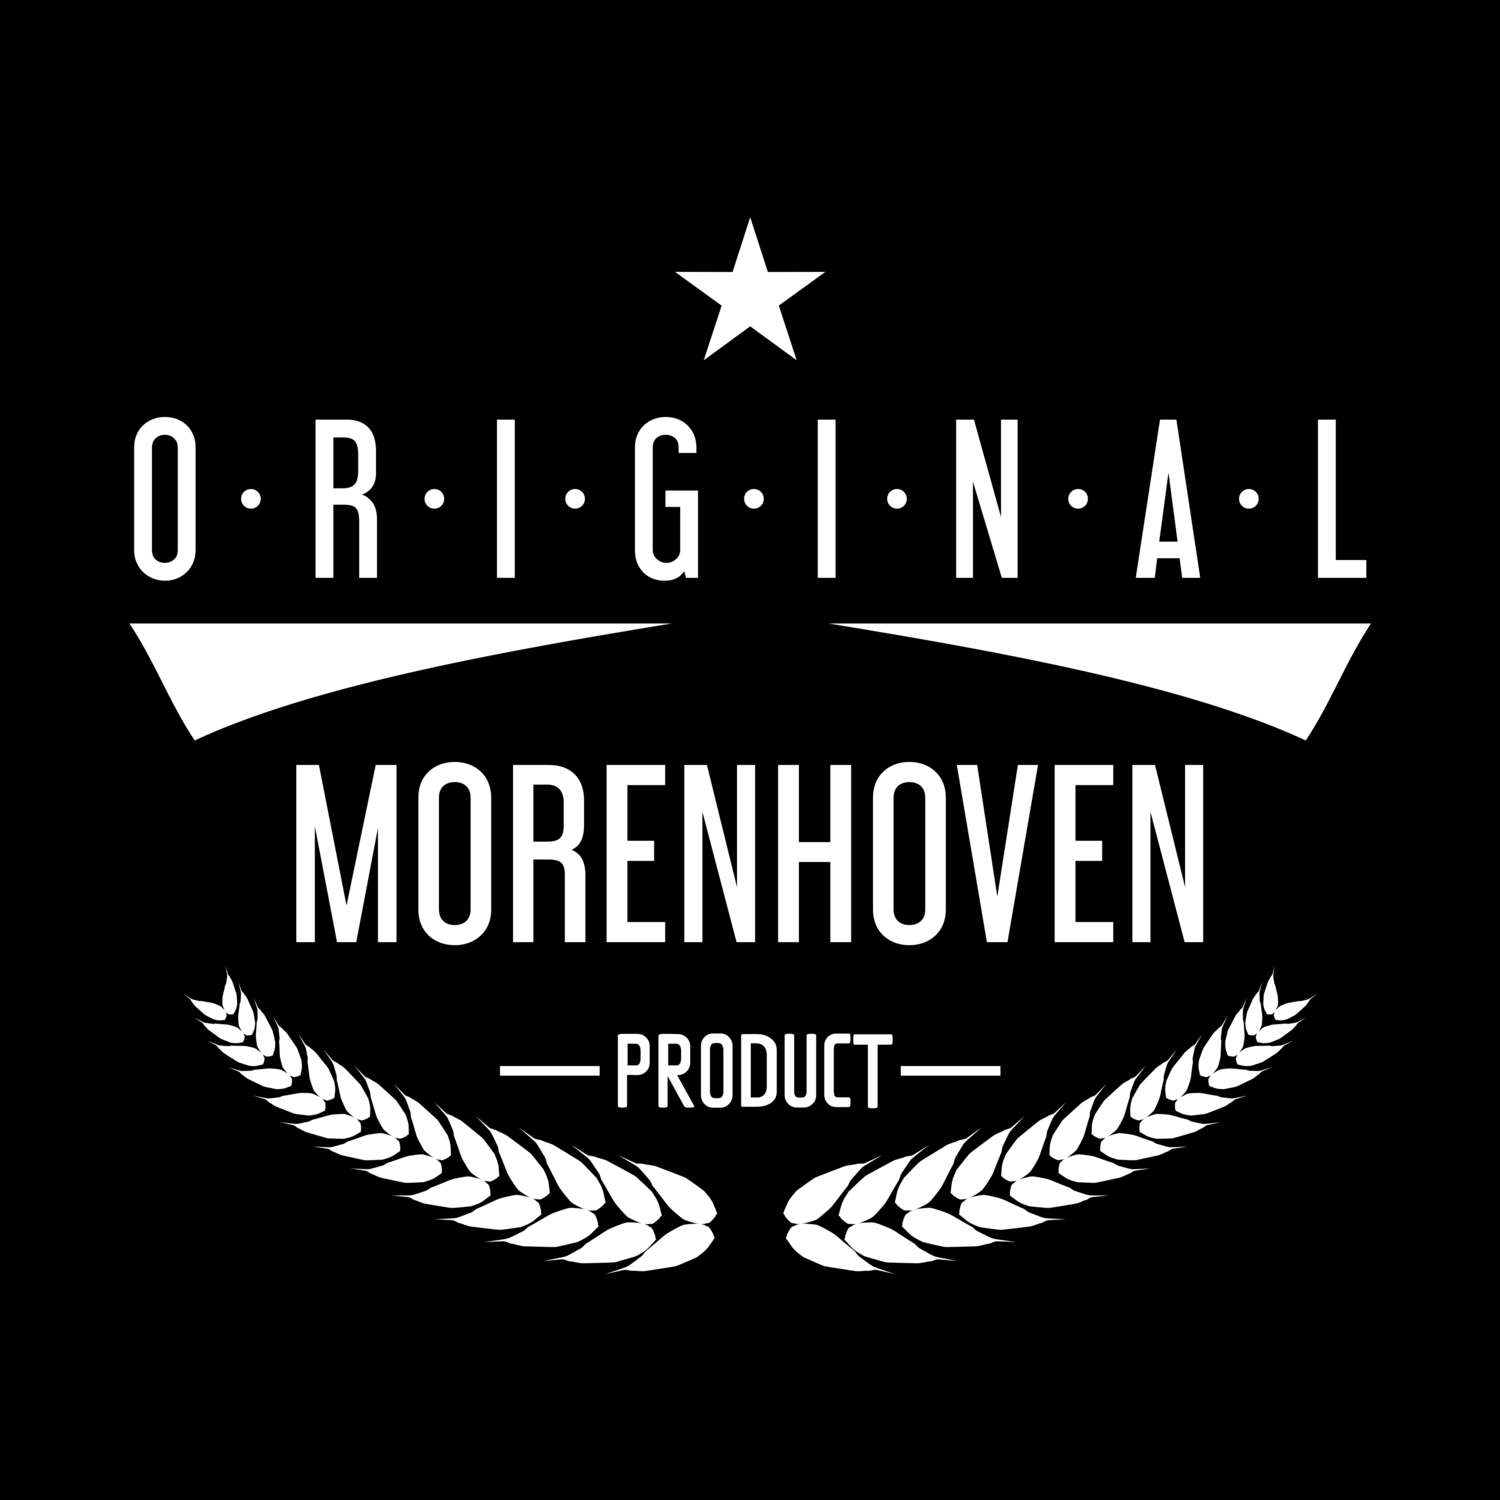 Morenhoven T-Shirt »Original Product«